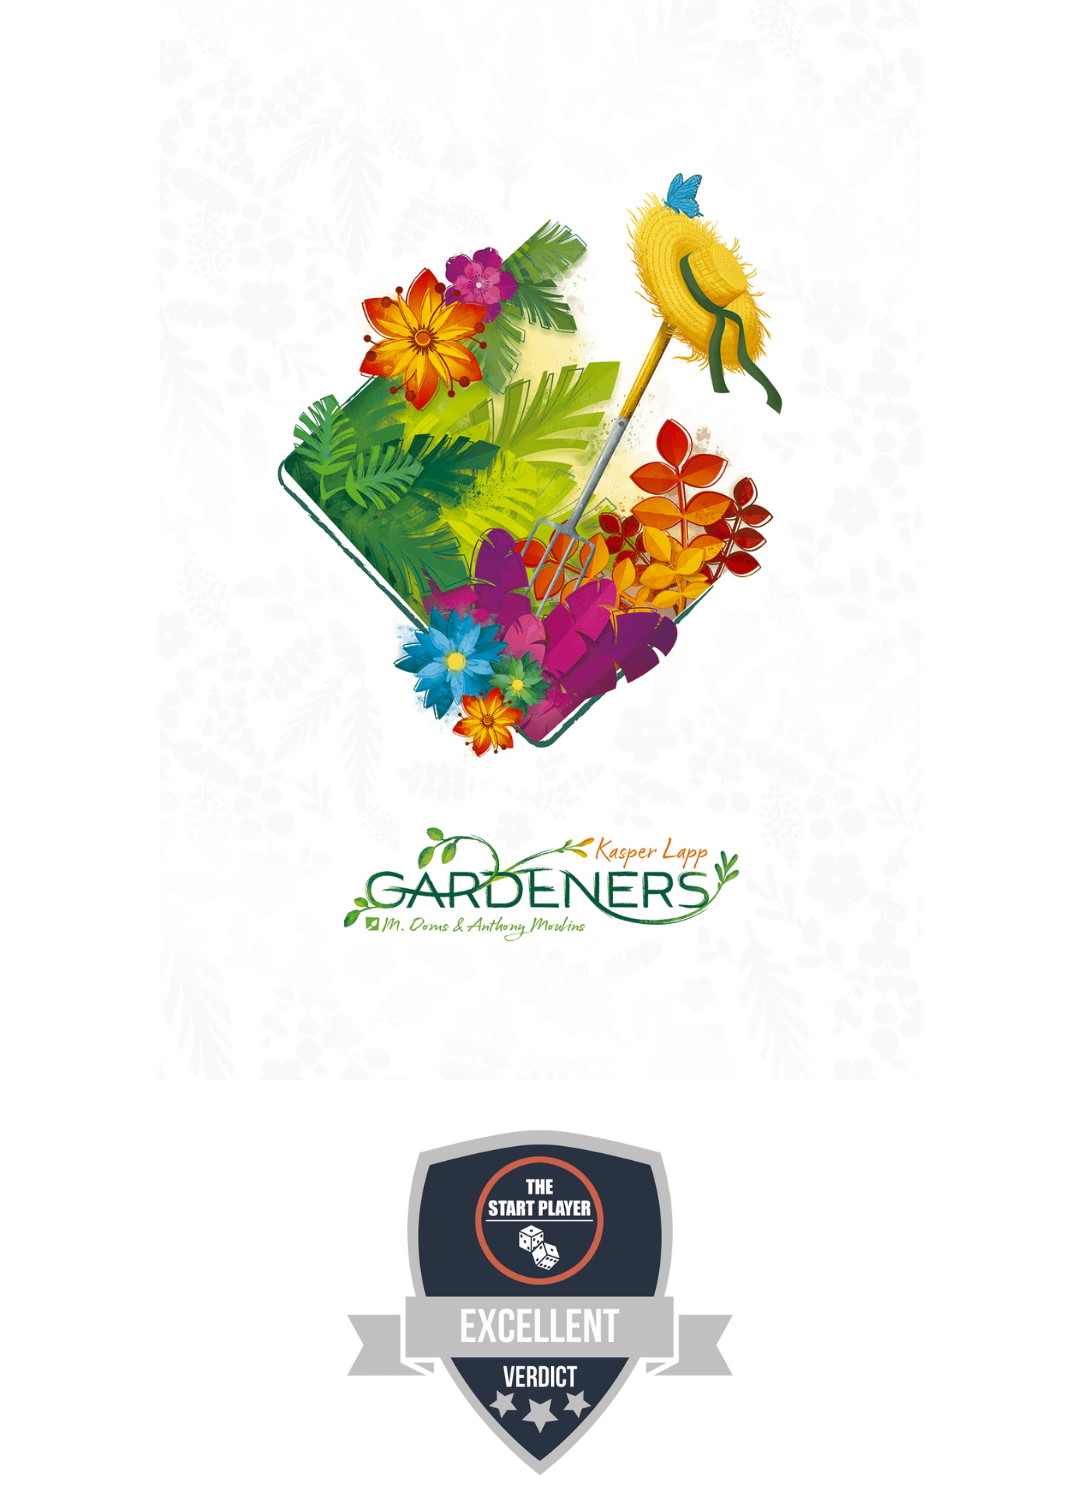 Review: Gardeners